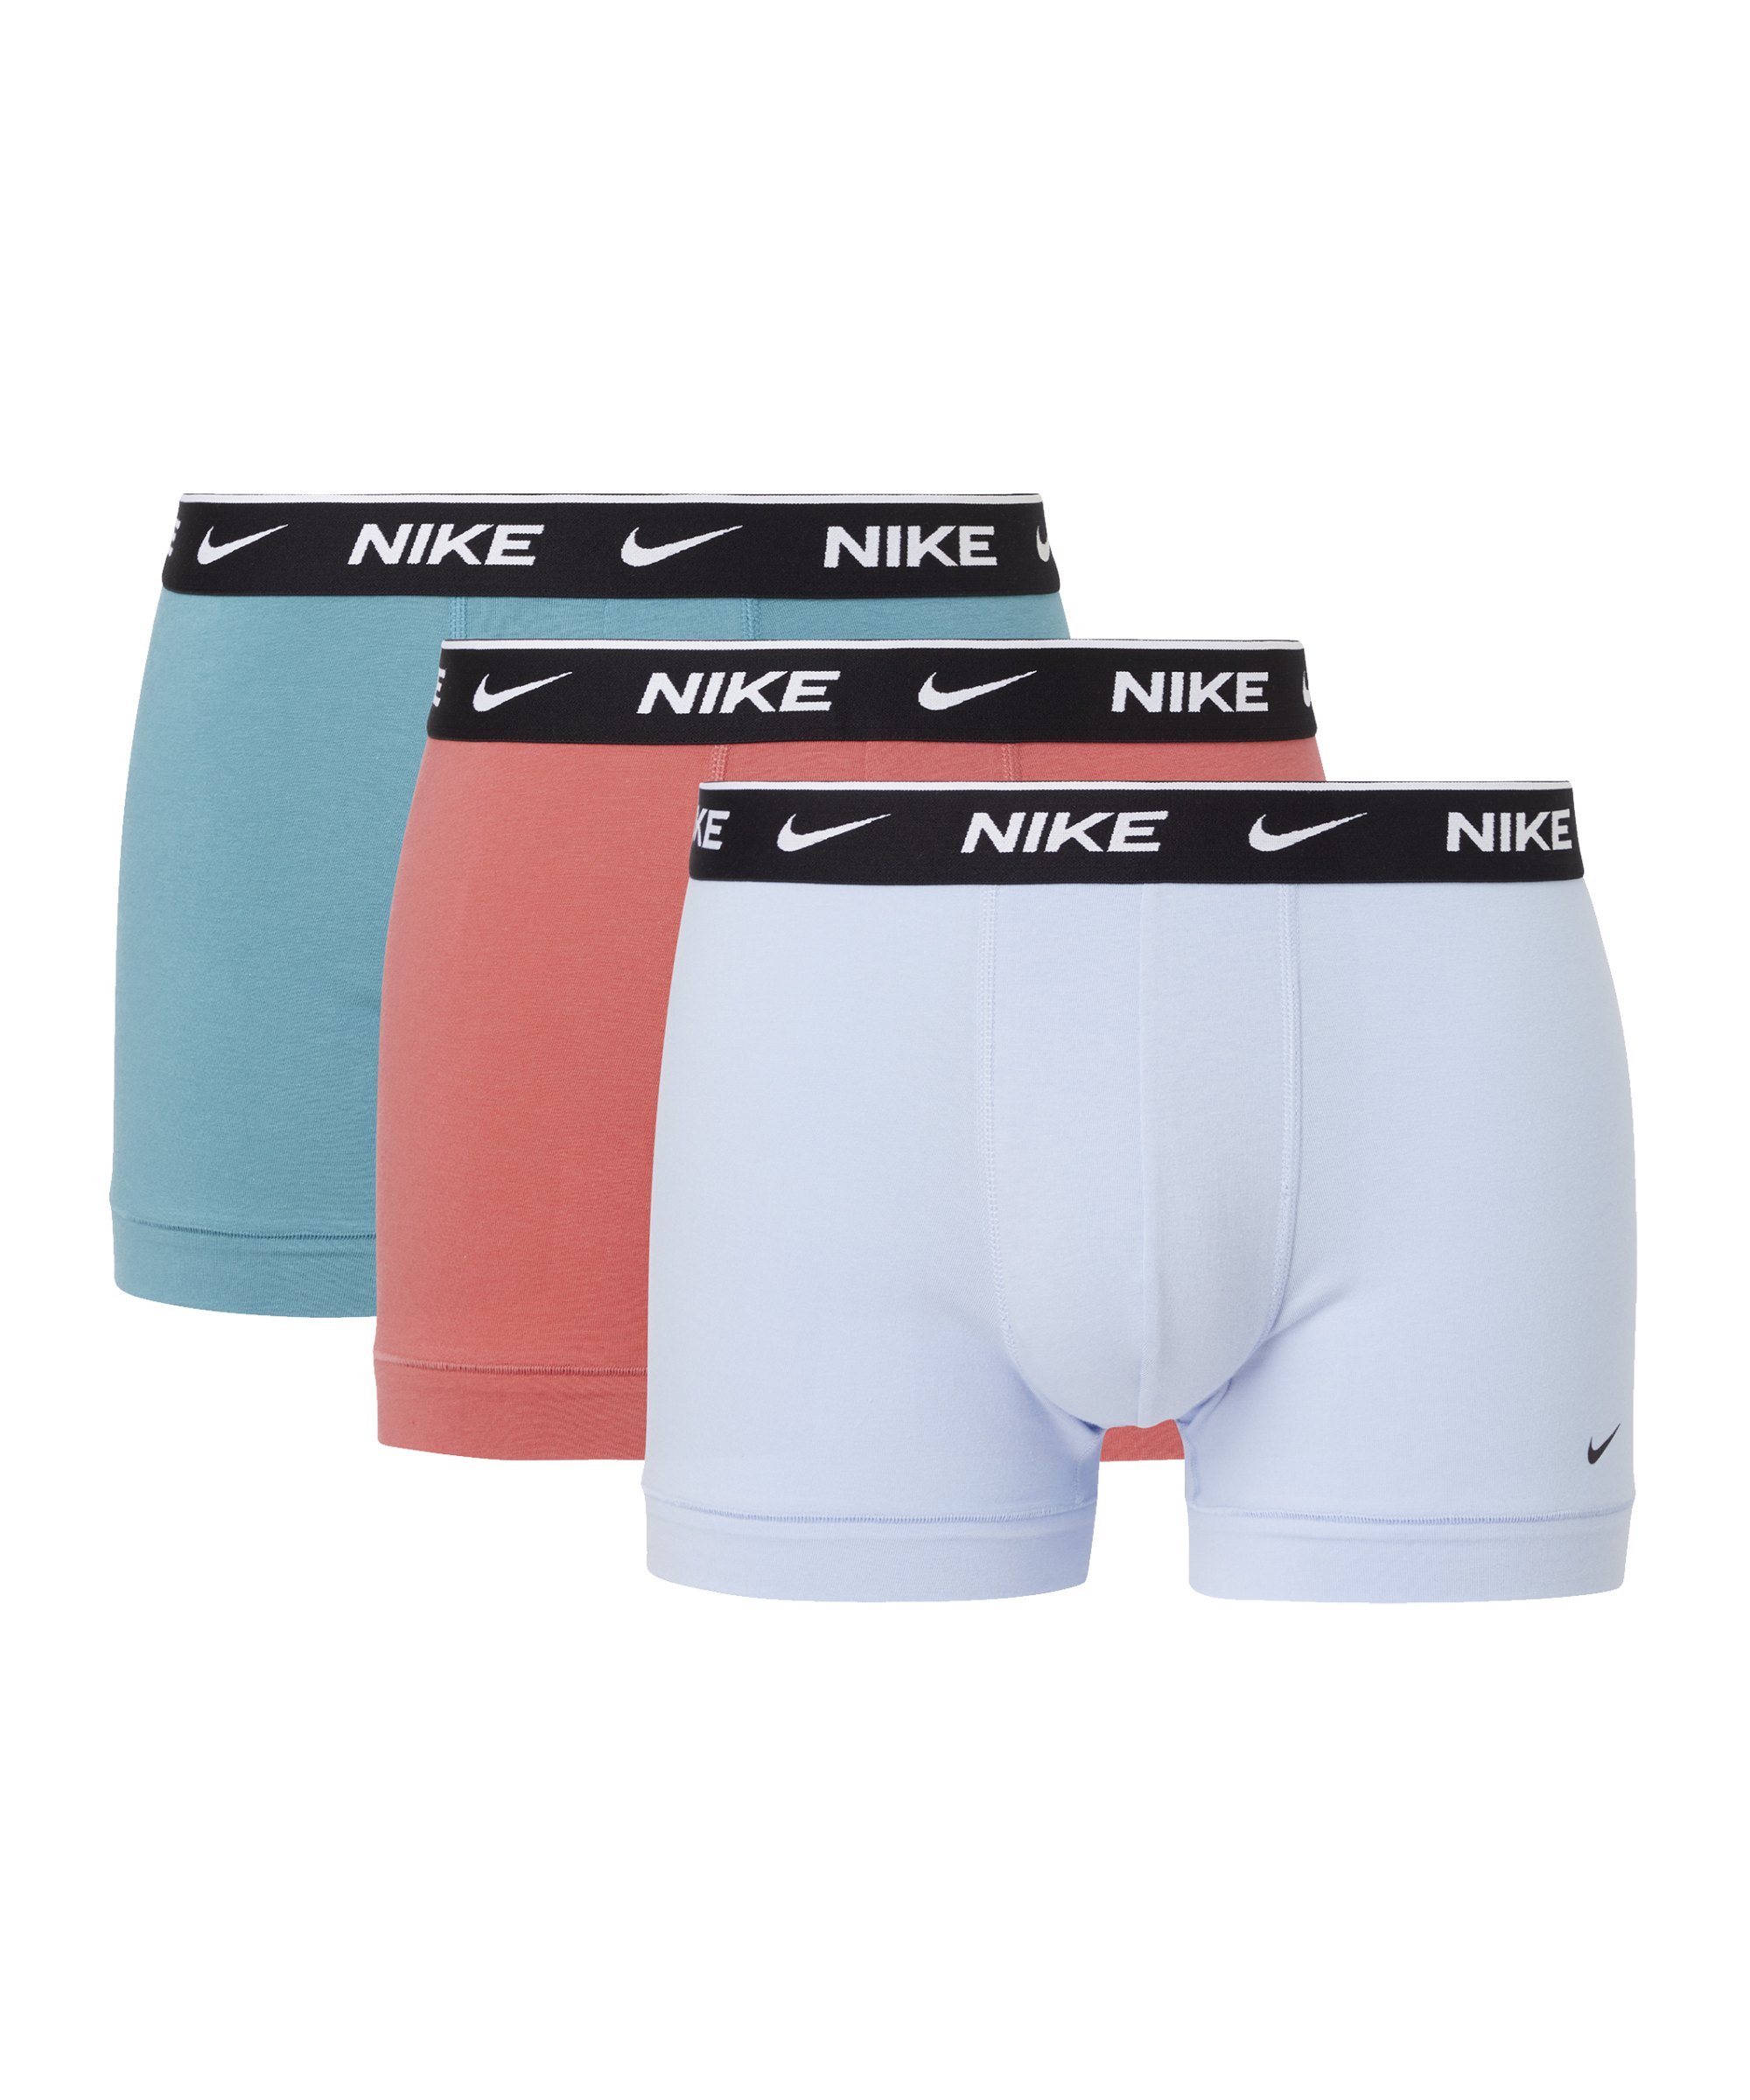 Nike Cotton Trunk Boxershort 3er Pack Rot FAN5 - rot